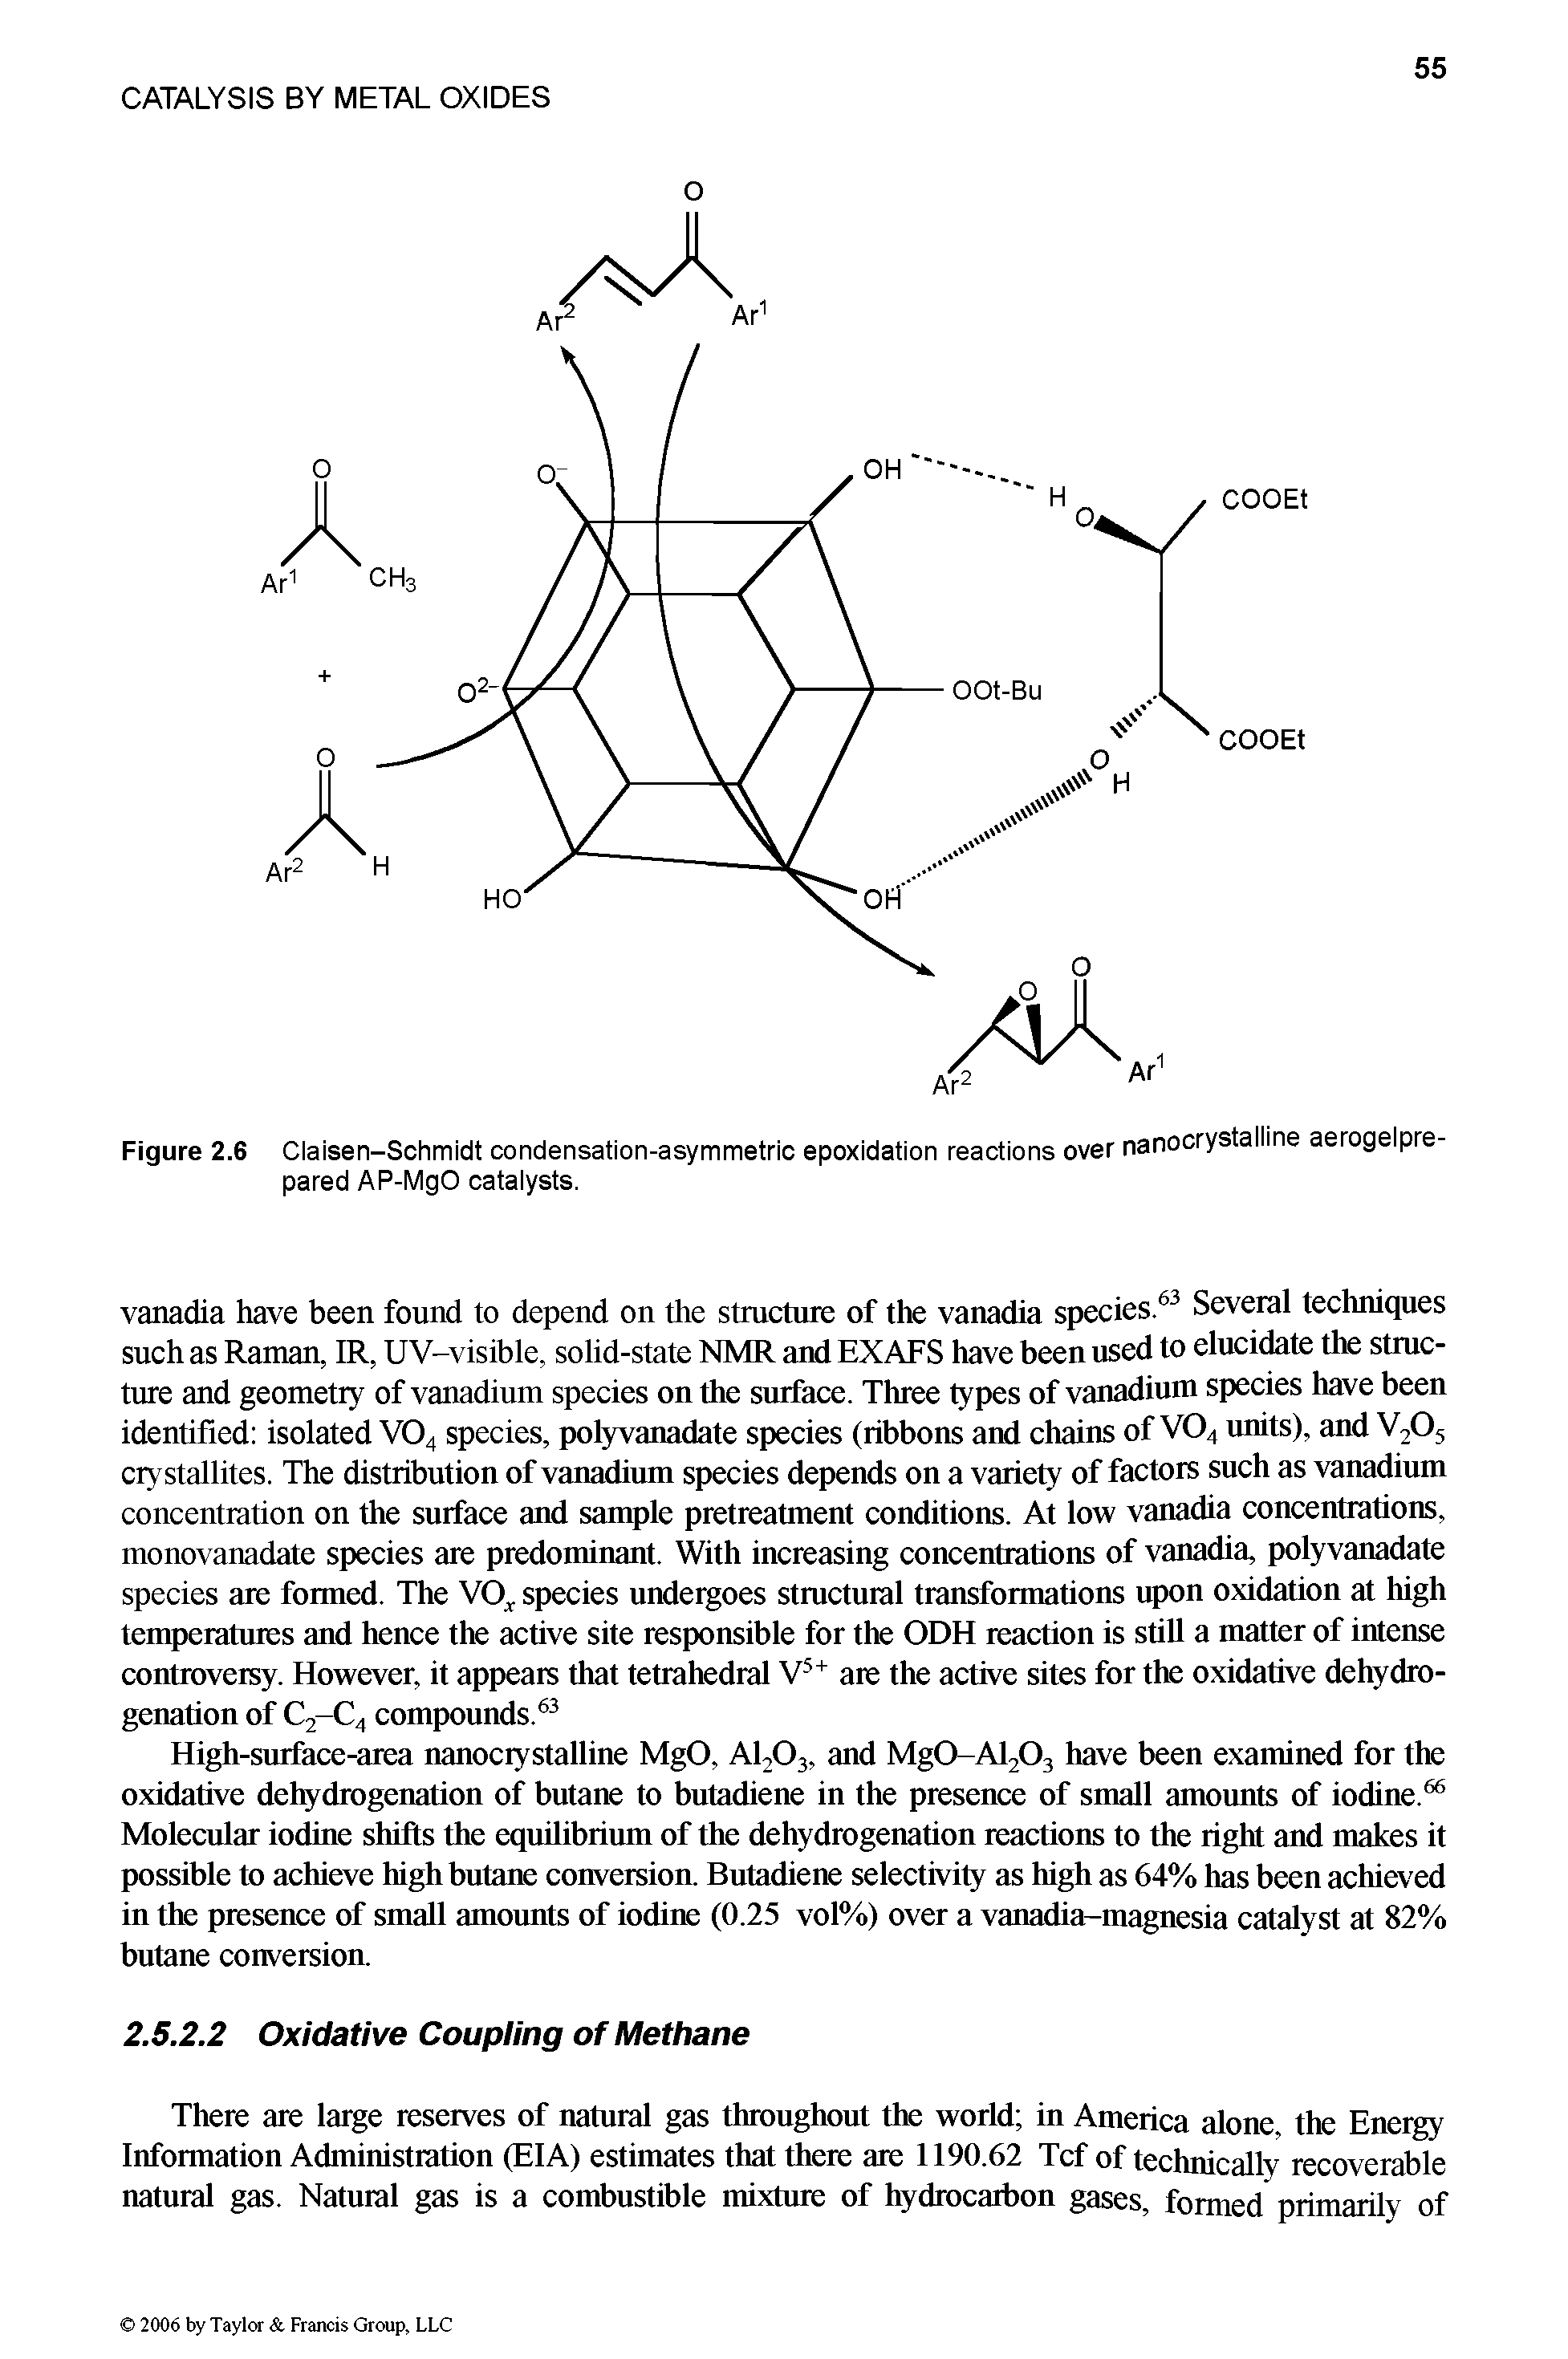 Figure 2.6 Claisen-Schmidt condensation-asymmetric epoxidation reactions over nanocrystalline aerogelpre pared AP-MgO catalysts.